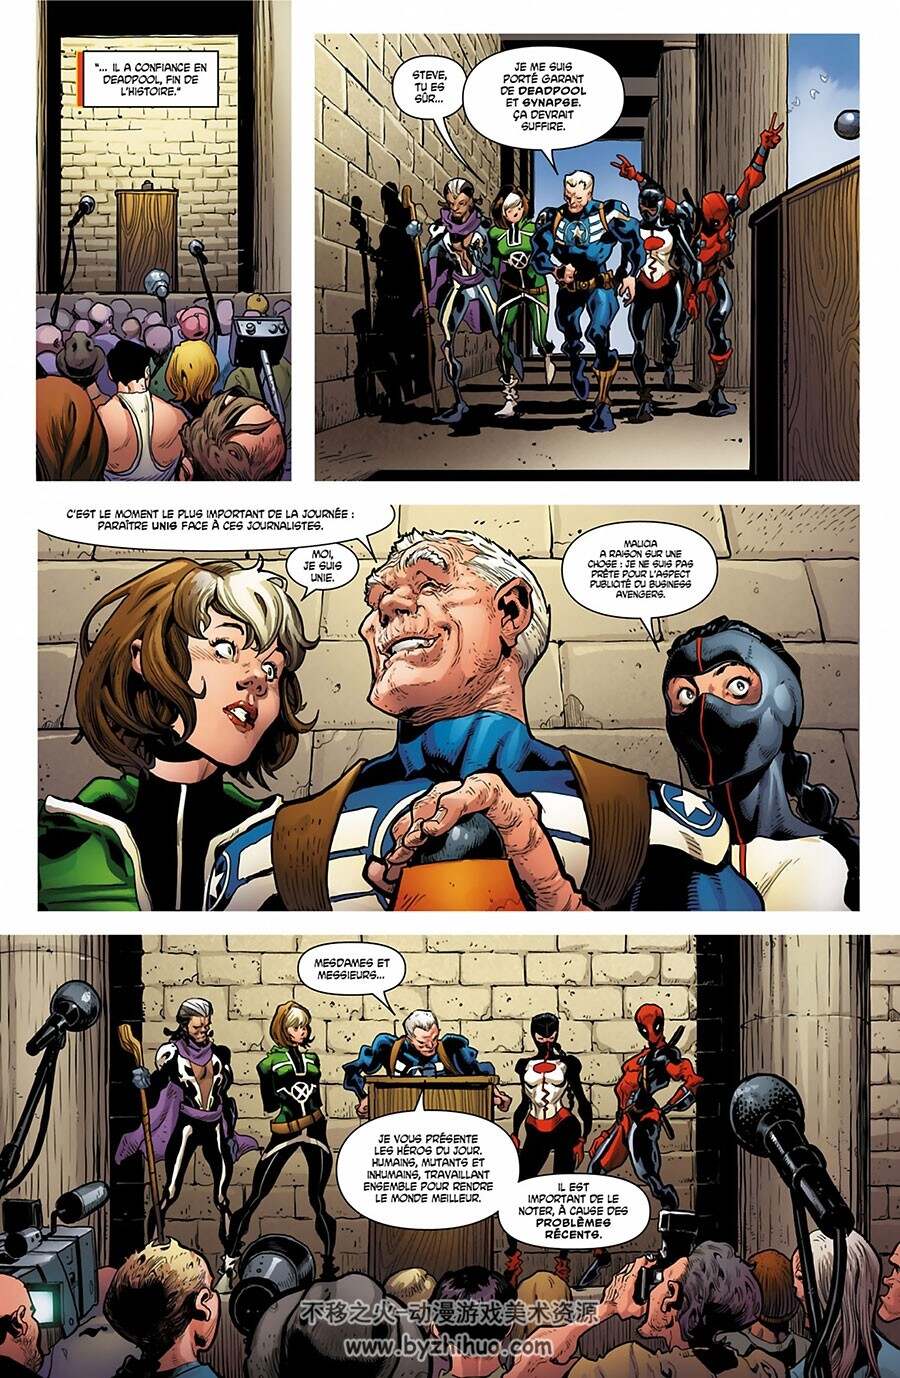 All-New Uncanny Avengers 1-3册 Ryan Stegman - Gerry Duggan 漫威科幻漫画